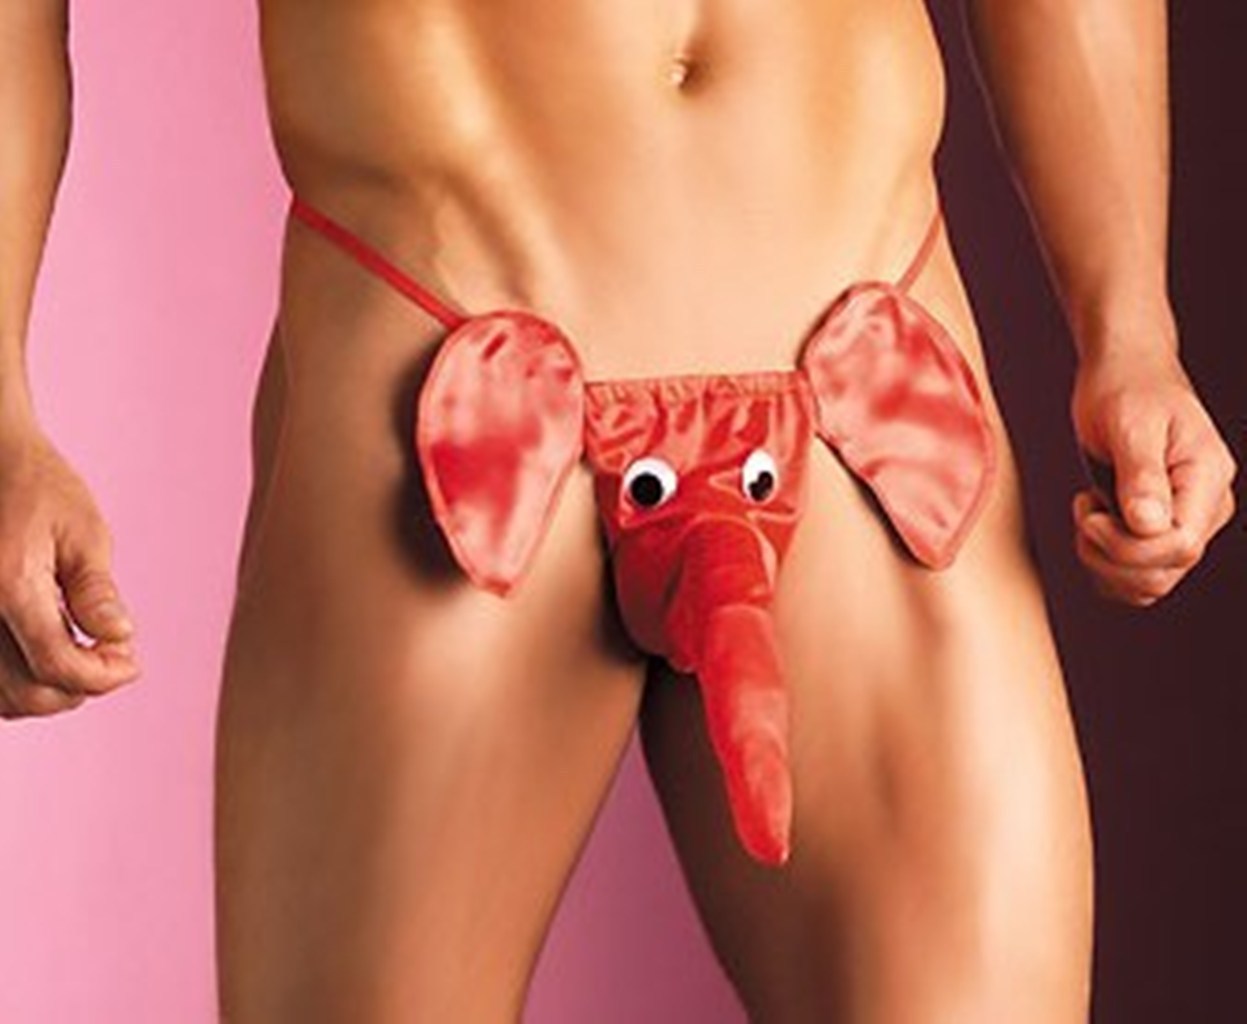 Cristiano Ronaldo Photo: Ronaldo bought a red thong that had an elephant&am...